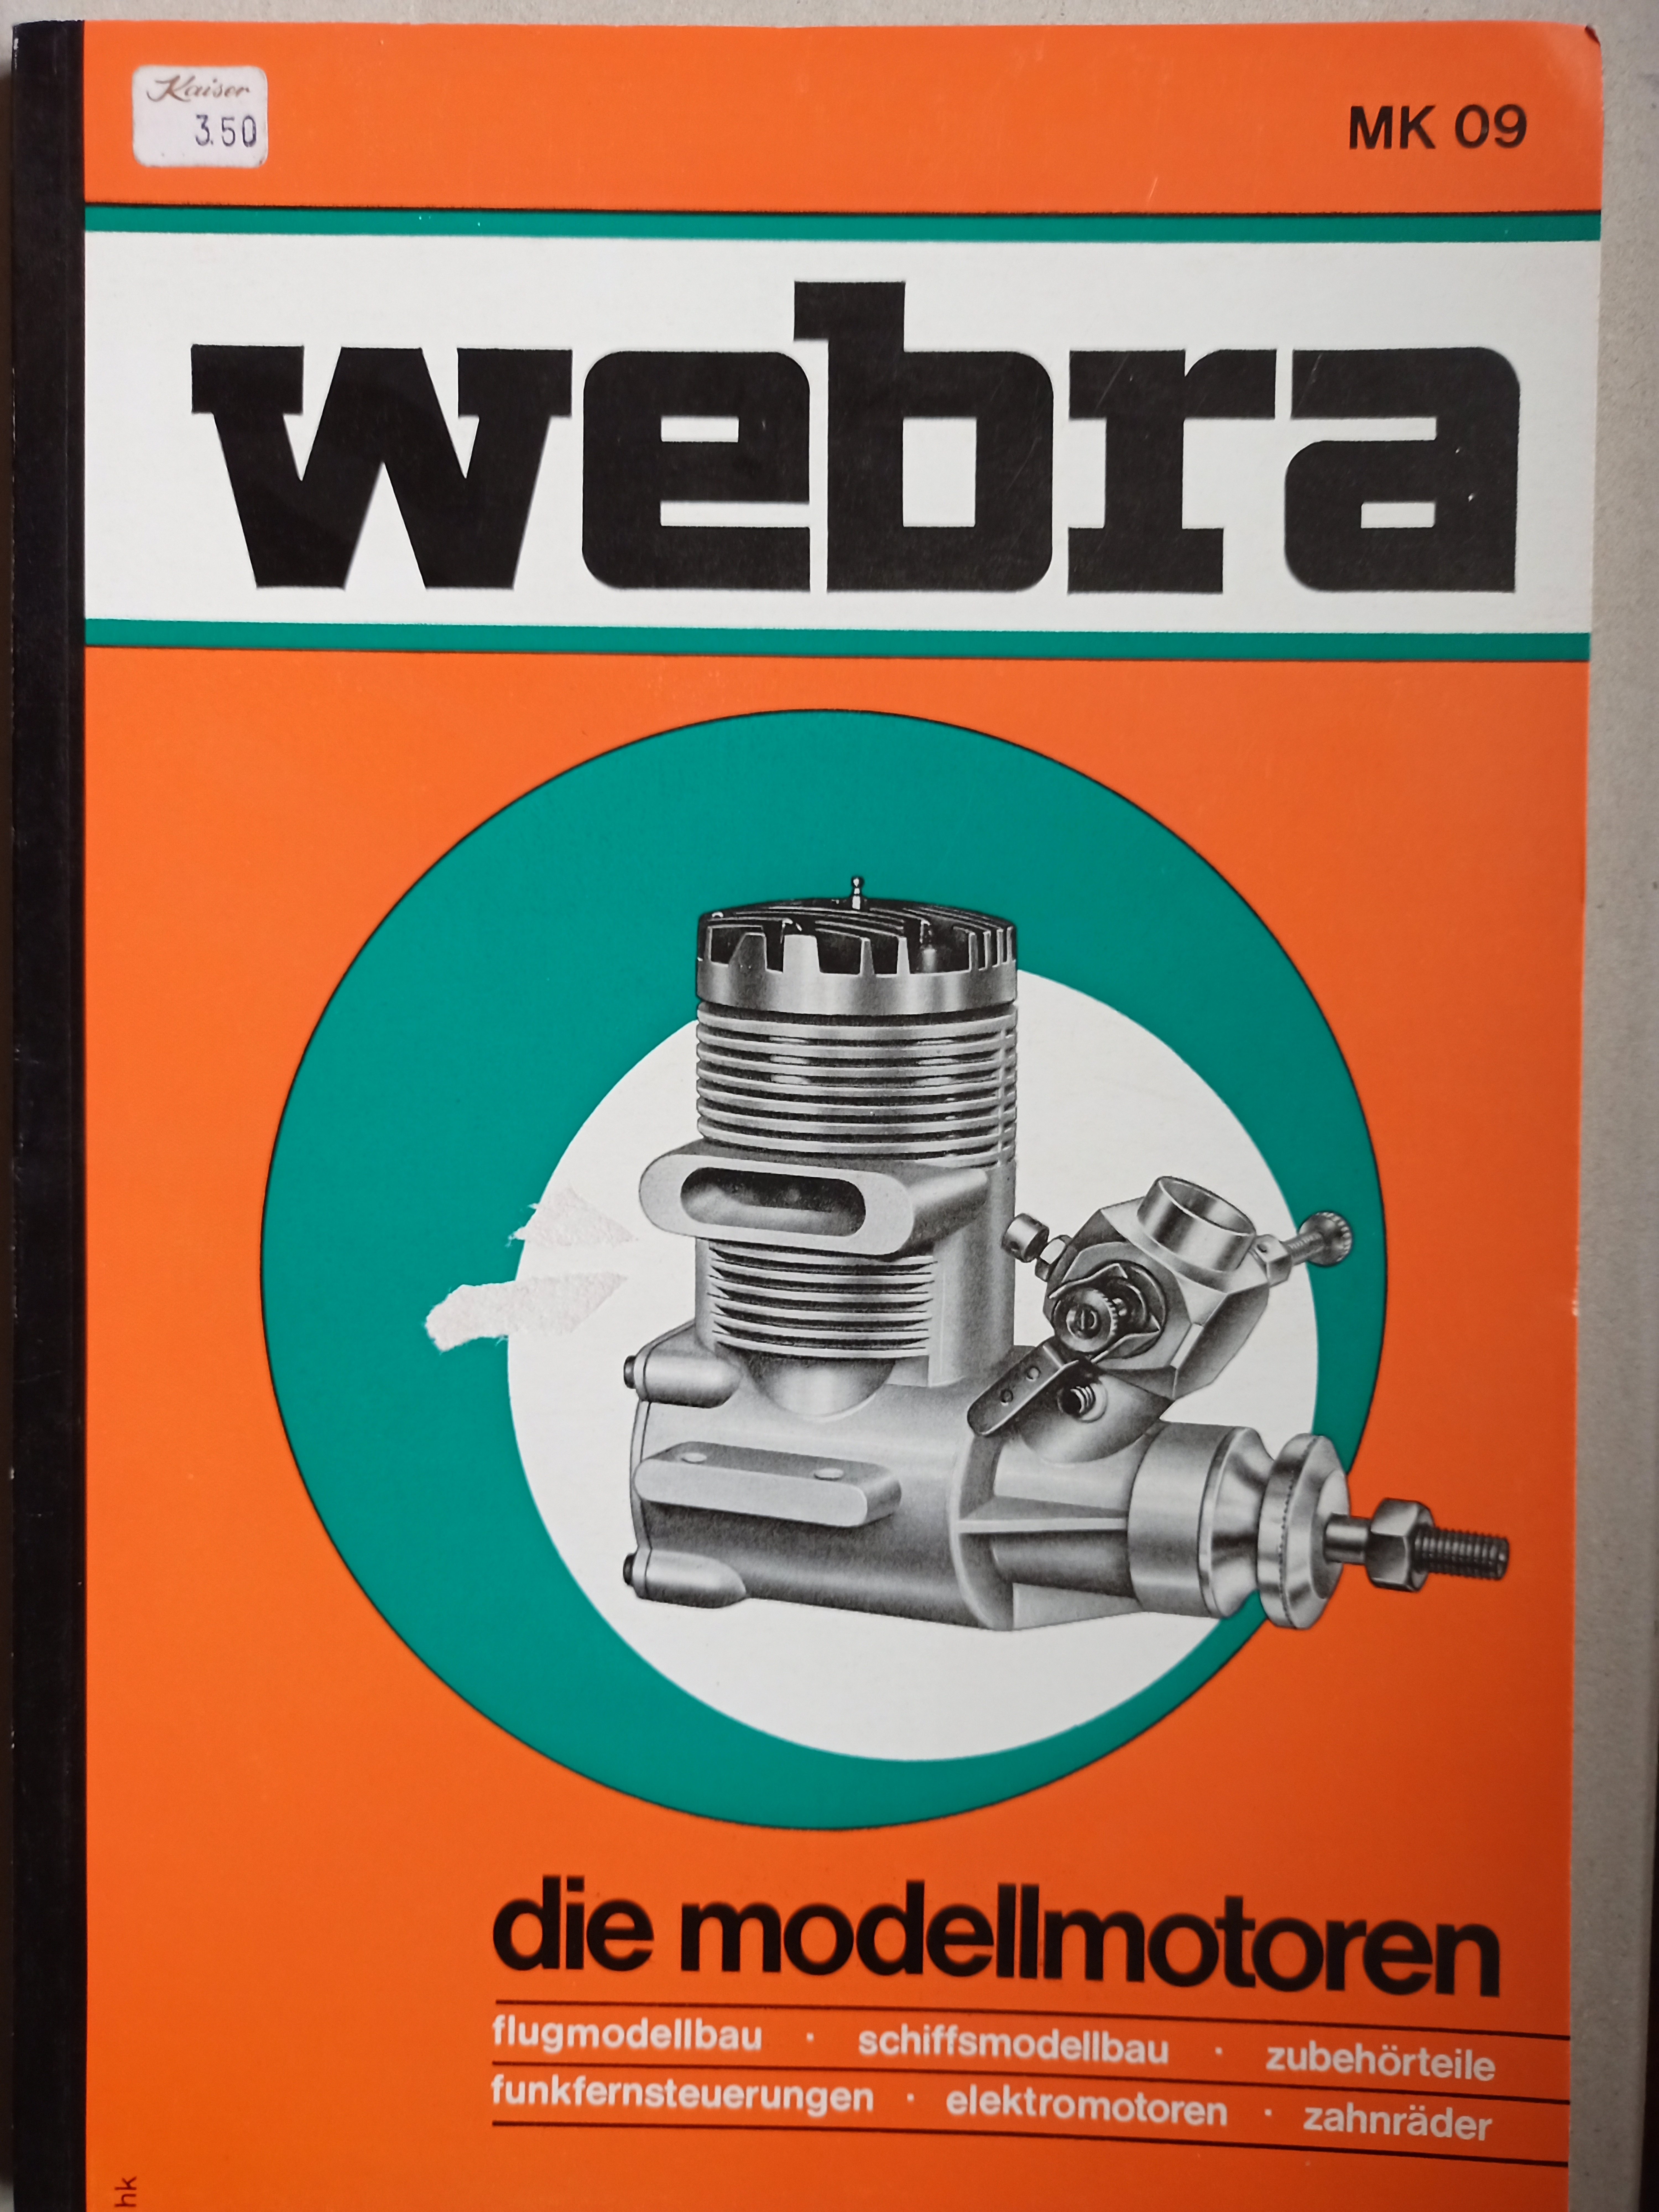 WEBRA Modellbau Katalog MK09 (Deutsches Segelflugmuseum mit Modellflug CC BY-NC-SA)